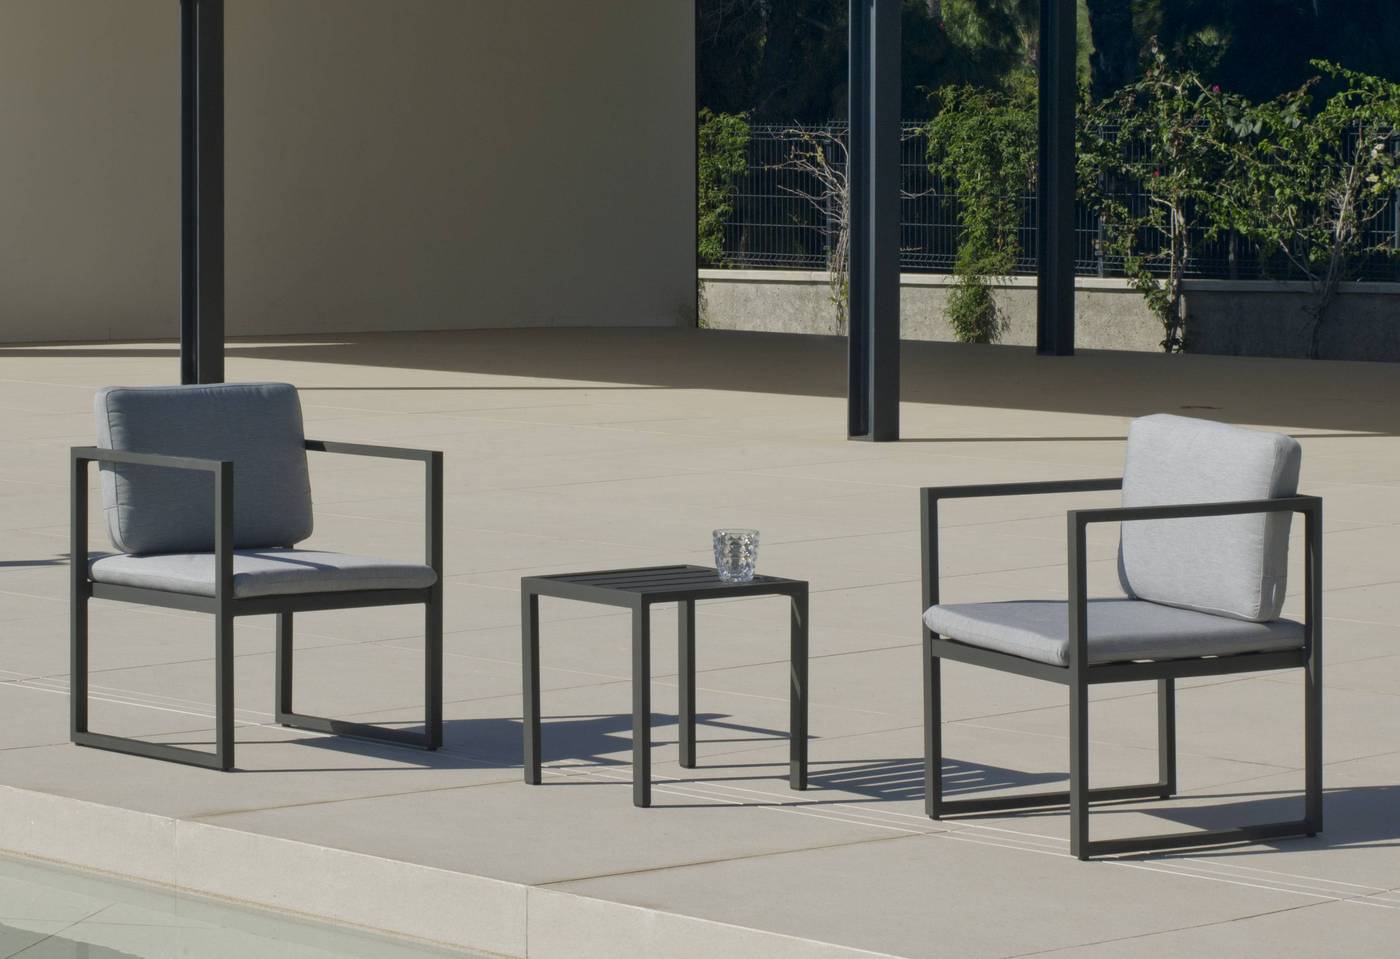 Set Aluminio Long Beach-15 - Conjunto de aluminio apilable: 2 sillones + mesa auxiliar + cojines. Disponible en color blanco o antracita.